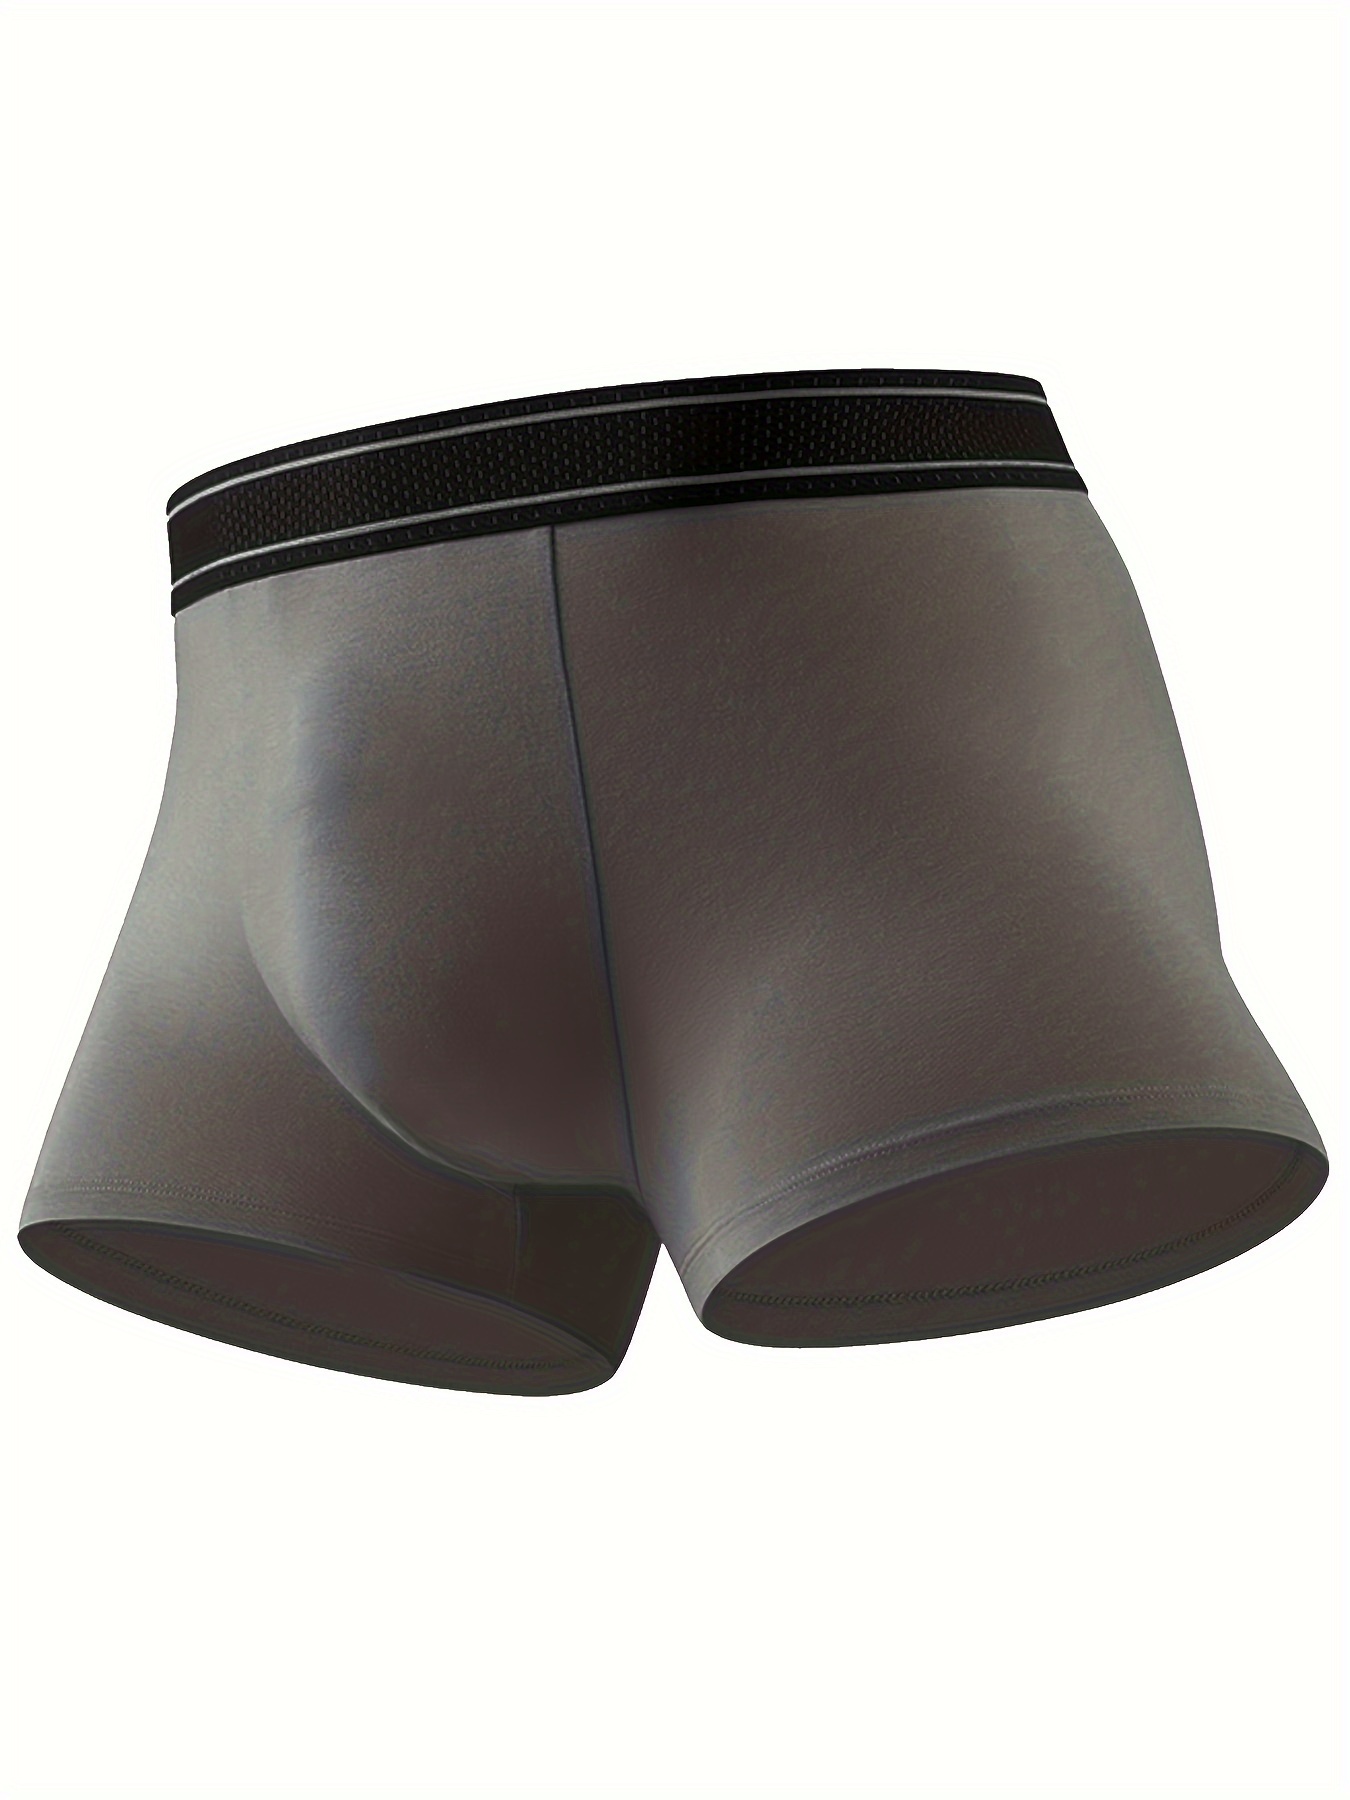 LAPASA Men's Sports Briefs Anti Chafing Underwear, Quick Dry